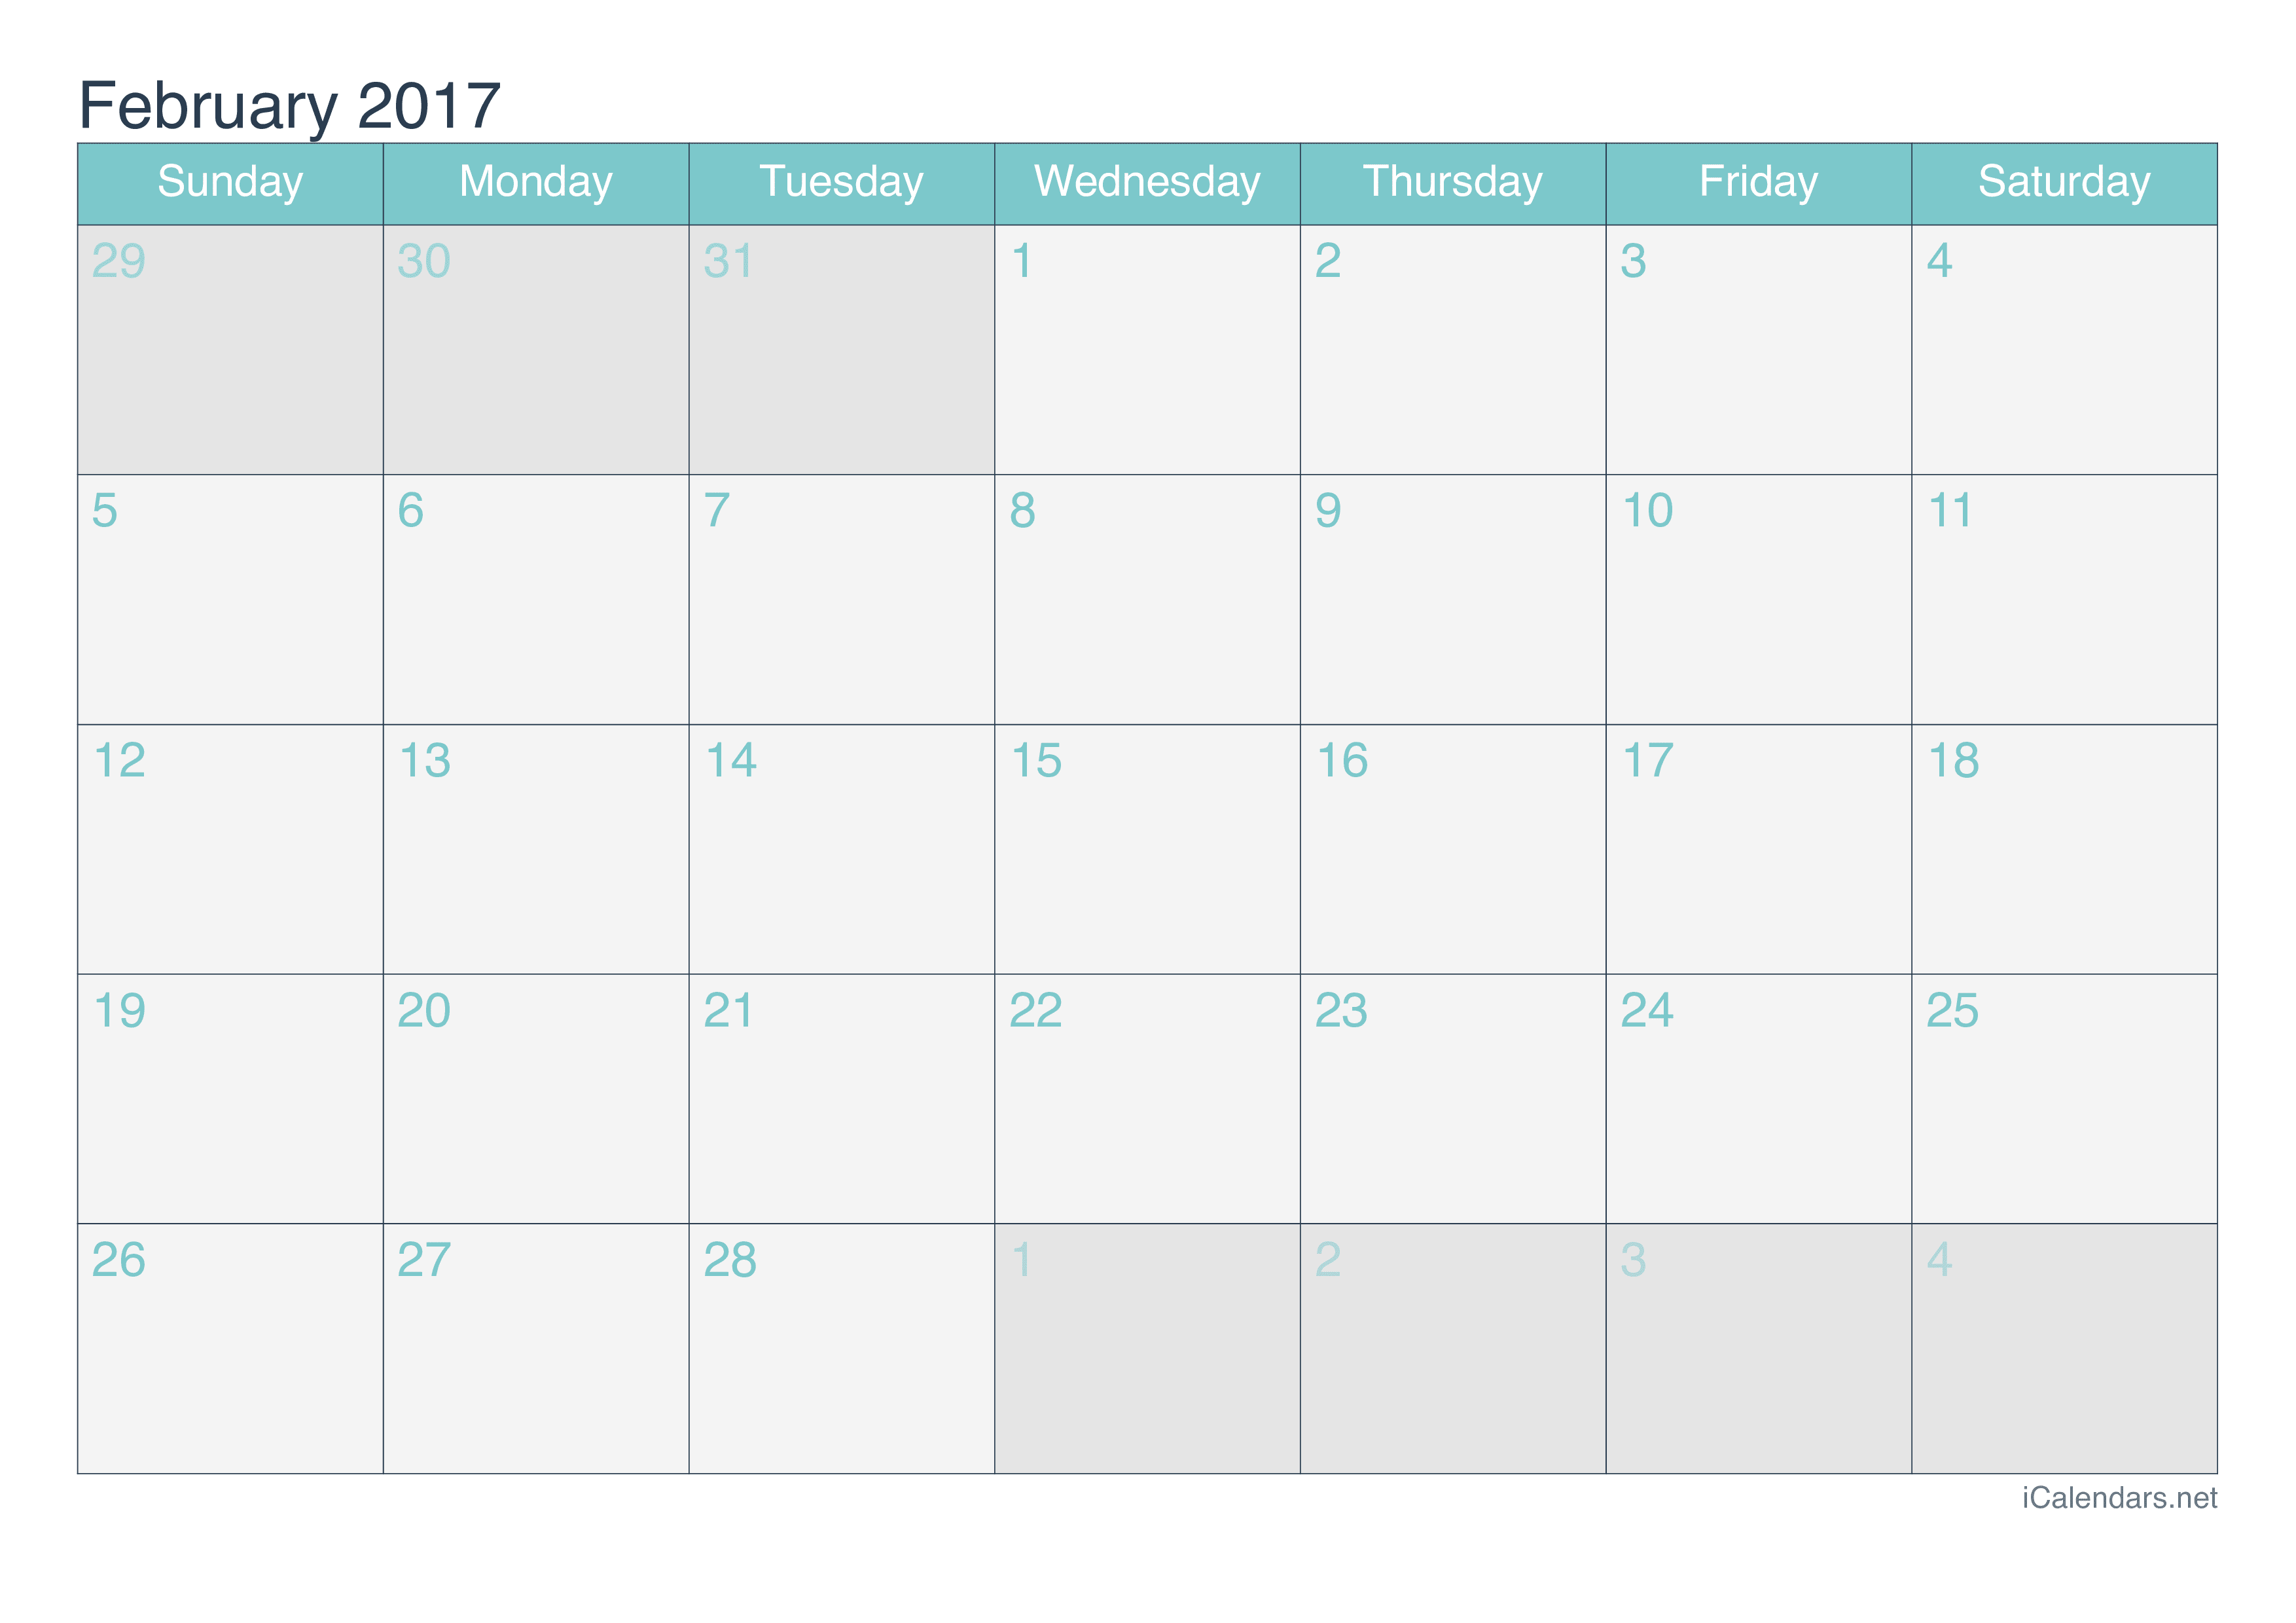 February 2017 Printable Calendar icalendars net